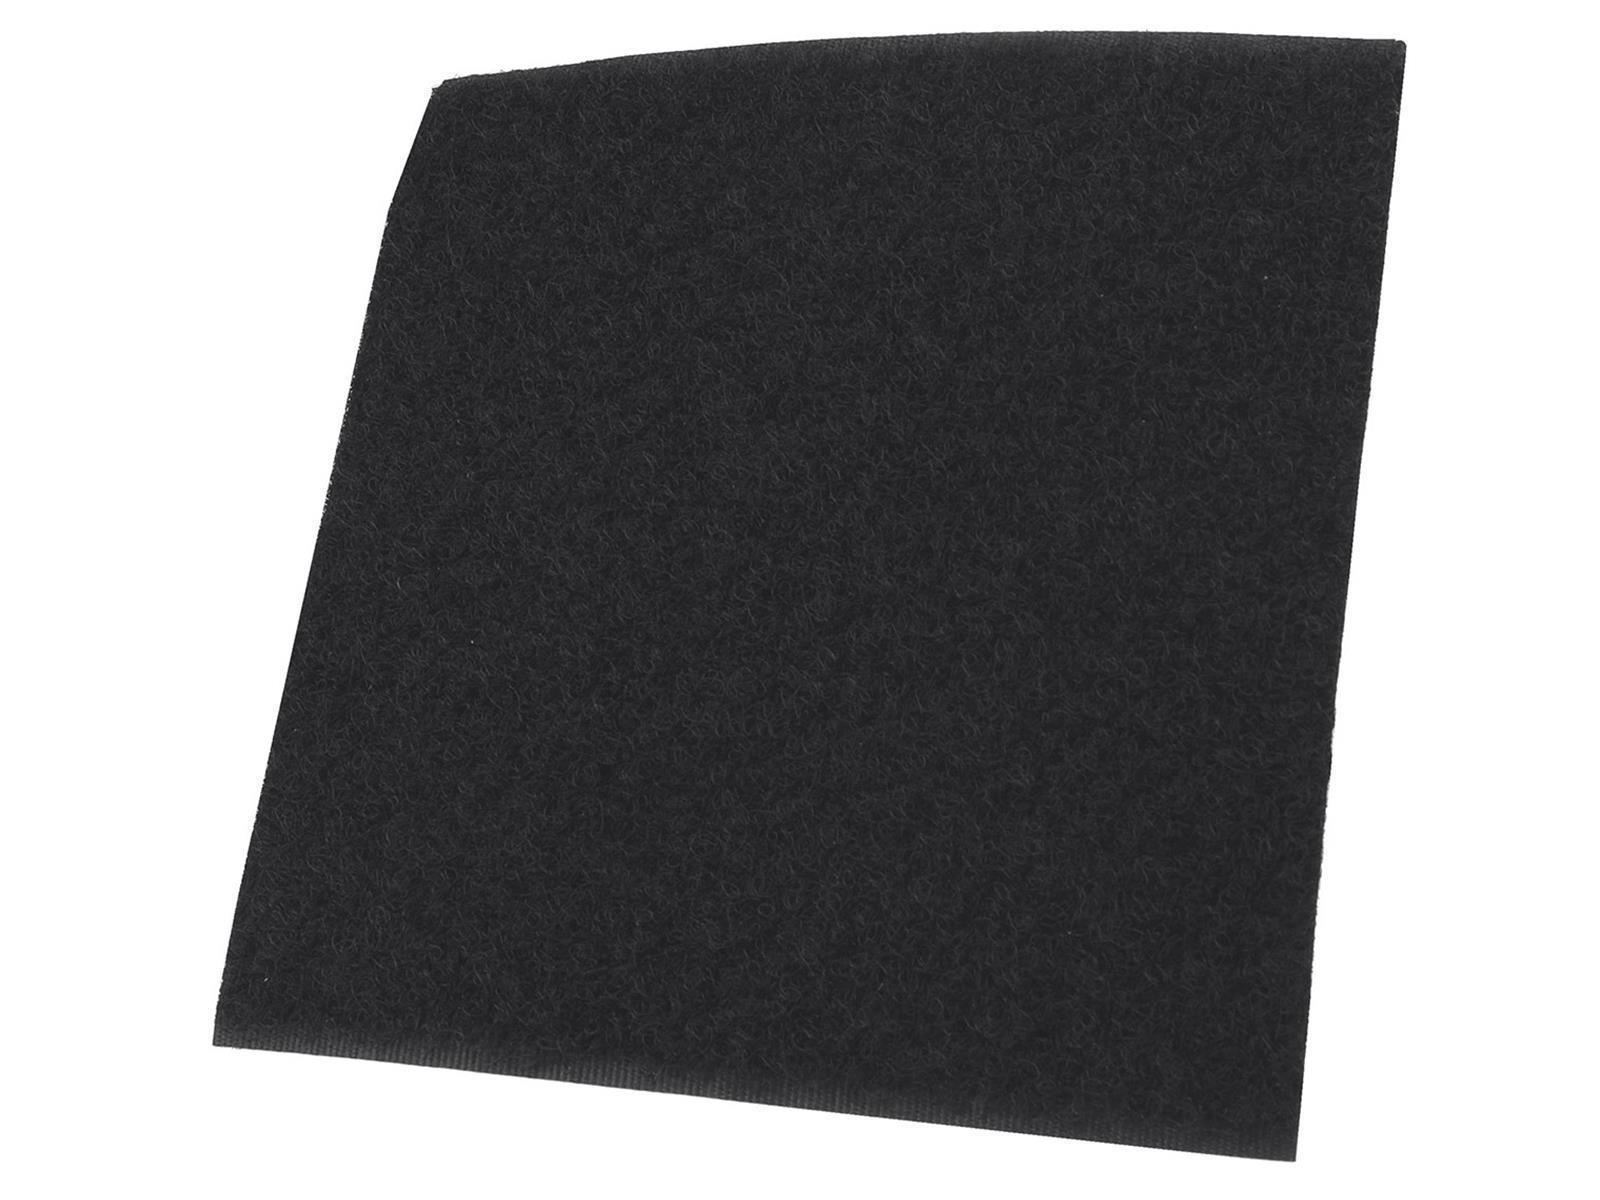 Klett-Pads 10Stück, selbstklebend2-lagig, 10x10cm, schwarz